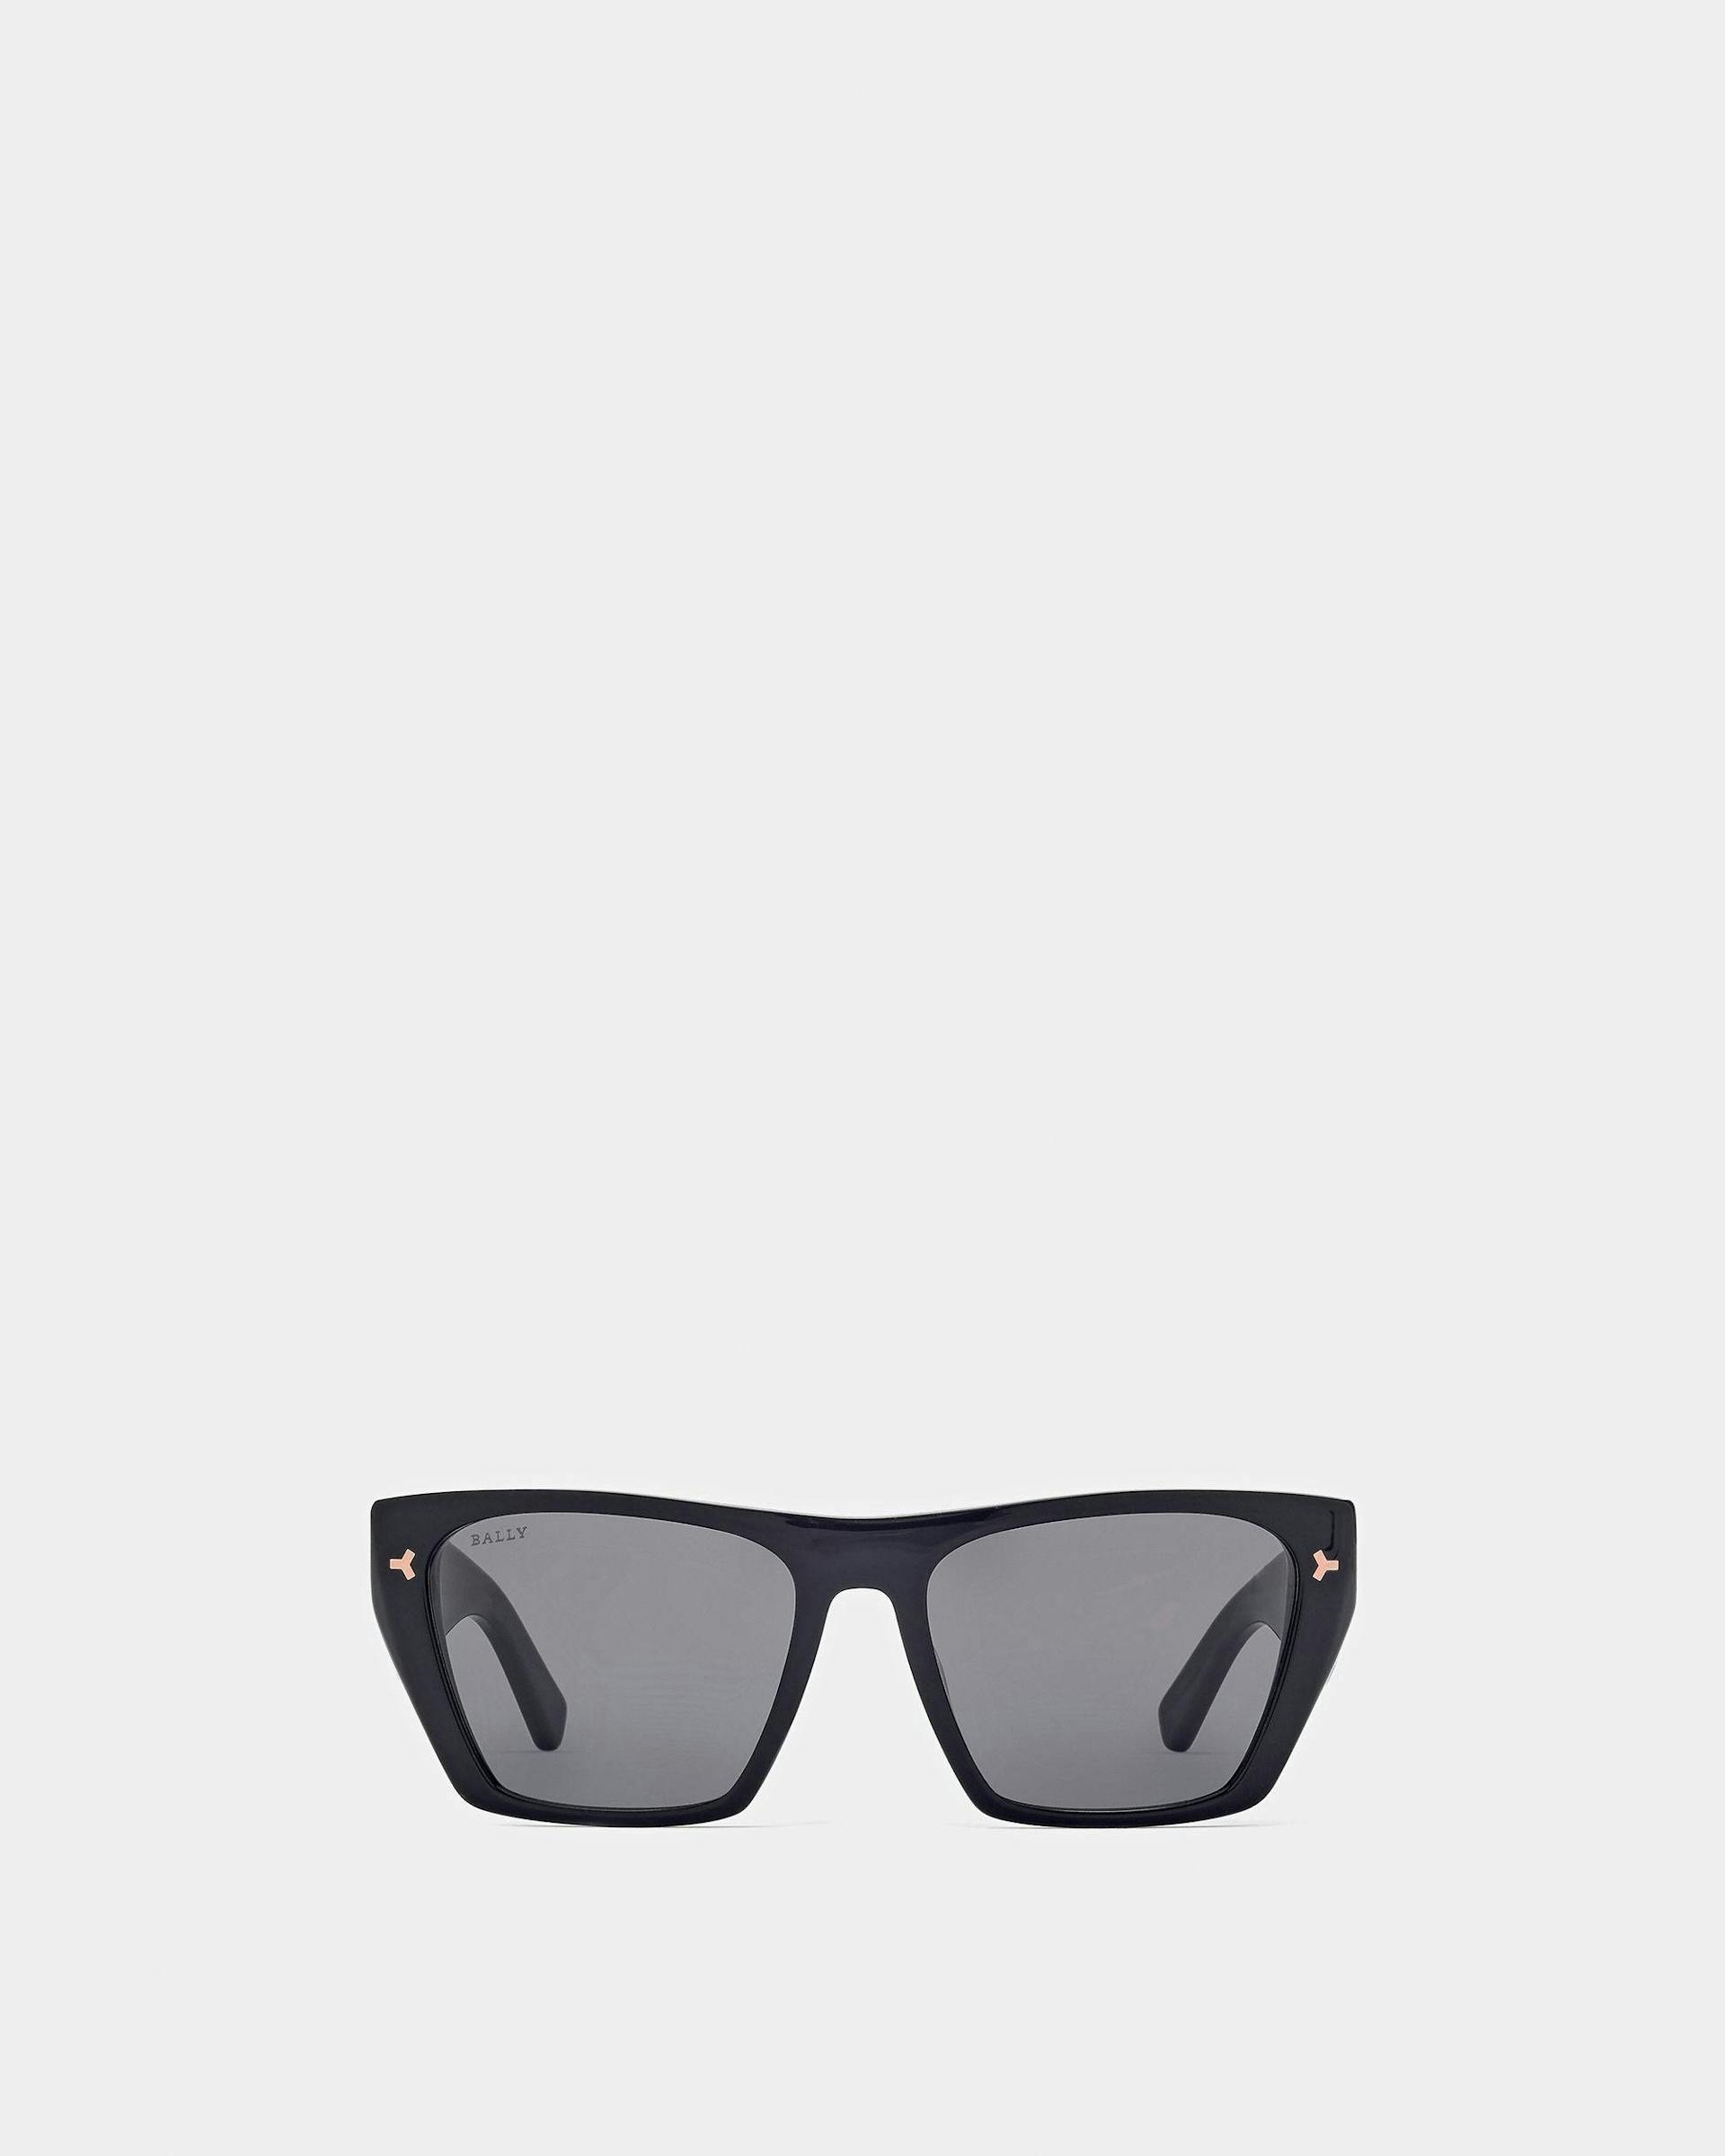 Ashley Geometric Full Rim Sunglasses In Black Plastic - Women's - Bally - 01